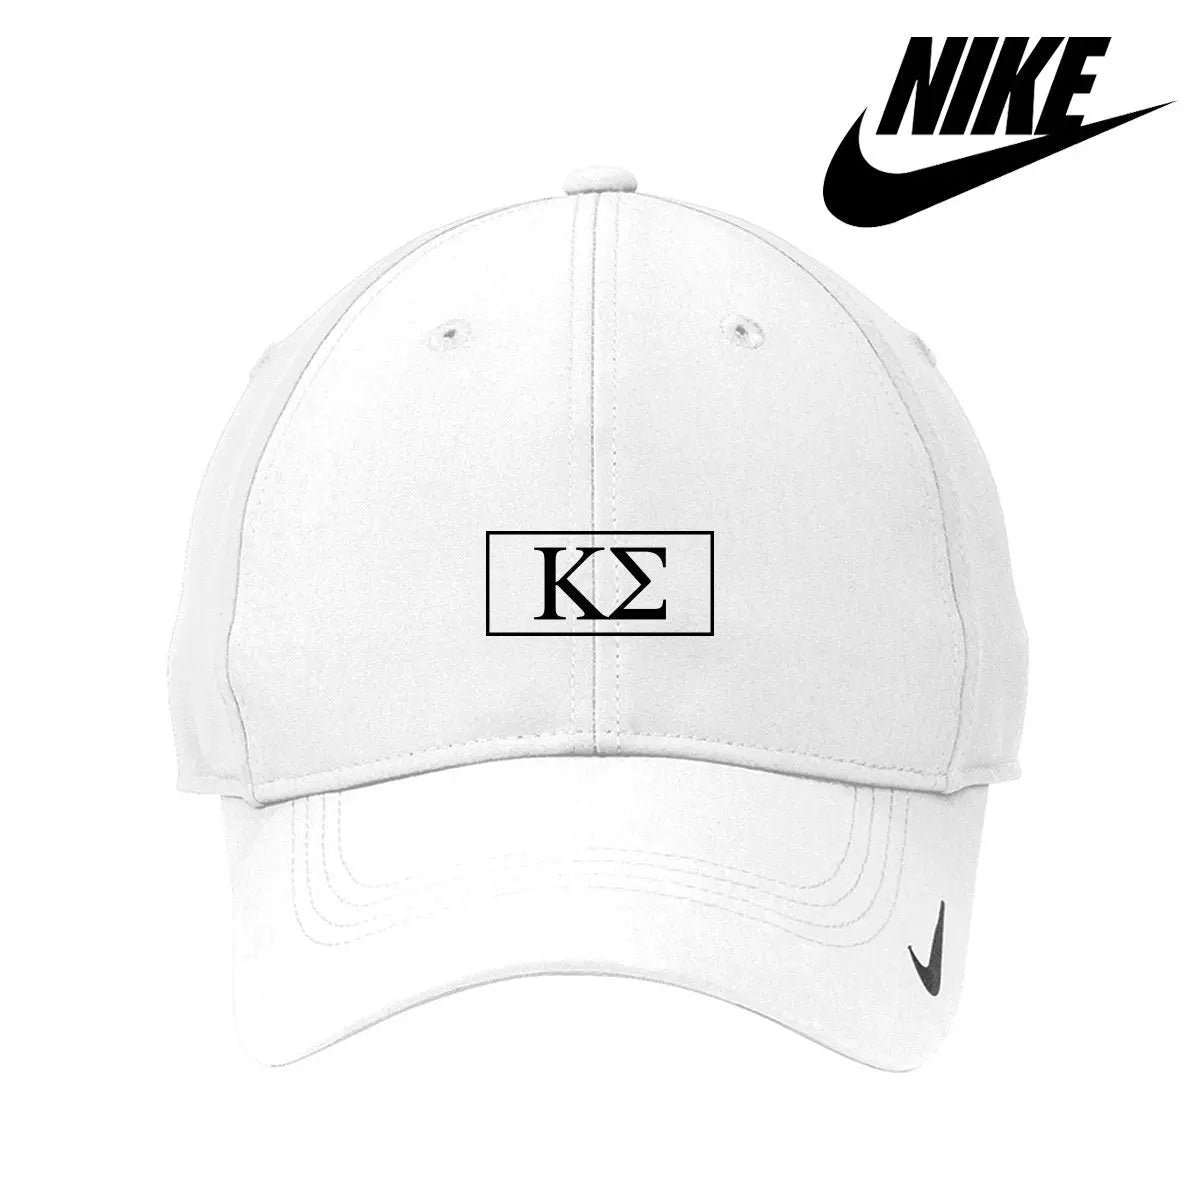 Kappa Sig White Nike Dri-FIT Performance Hat - Kappa Sigma Official Store